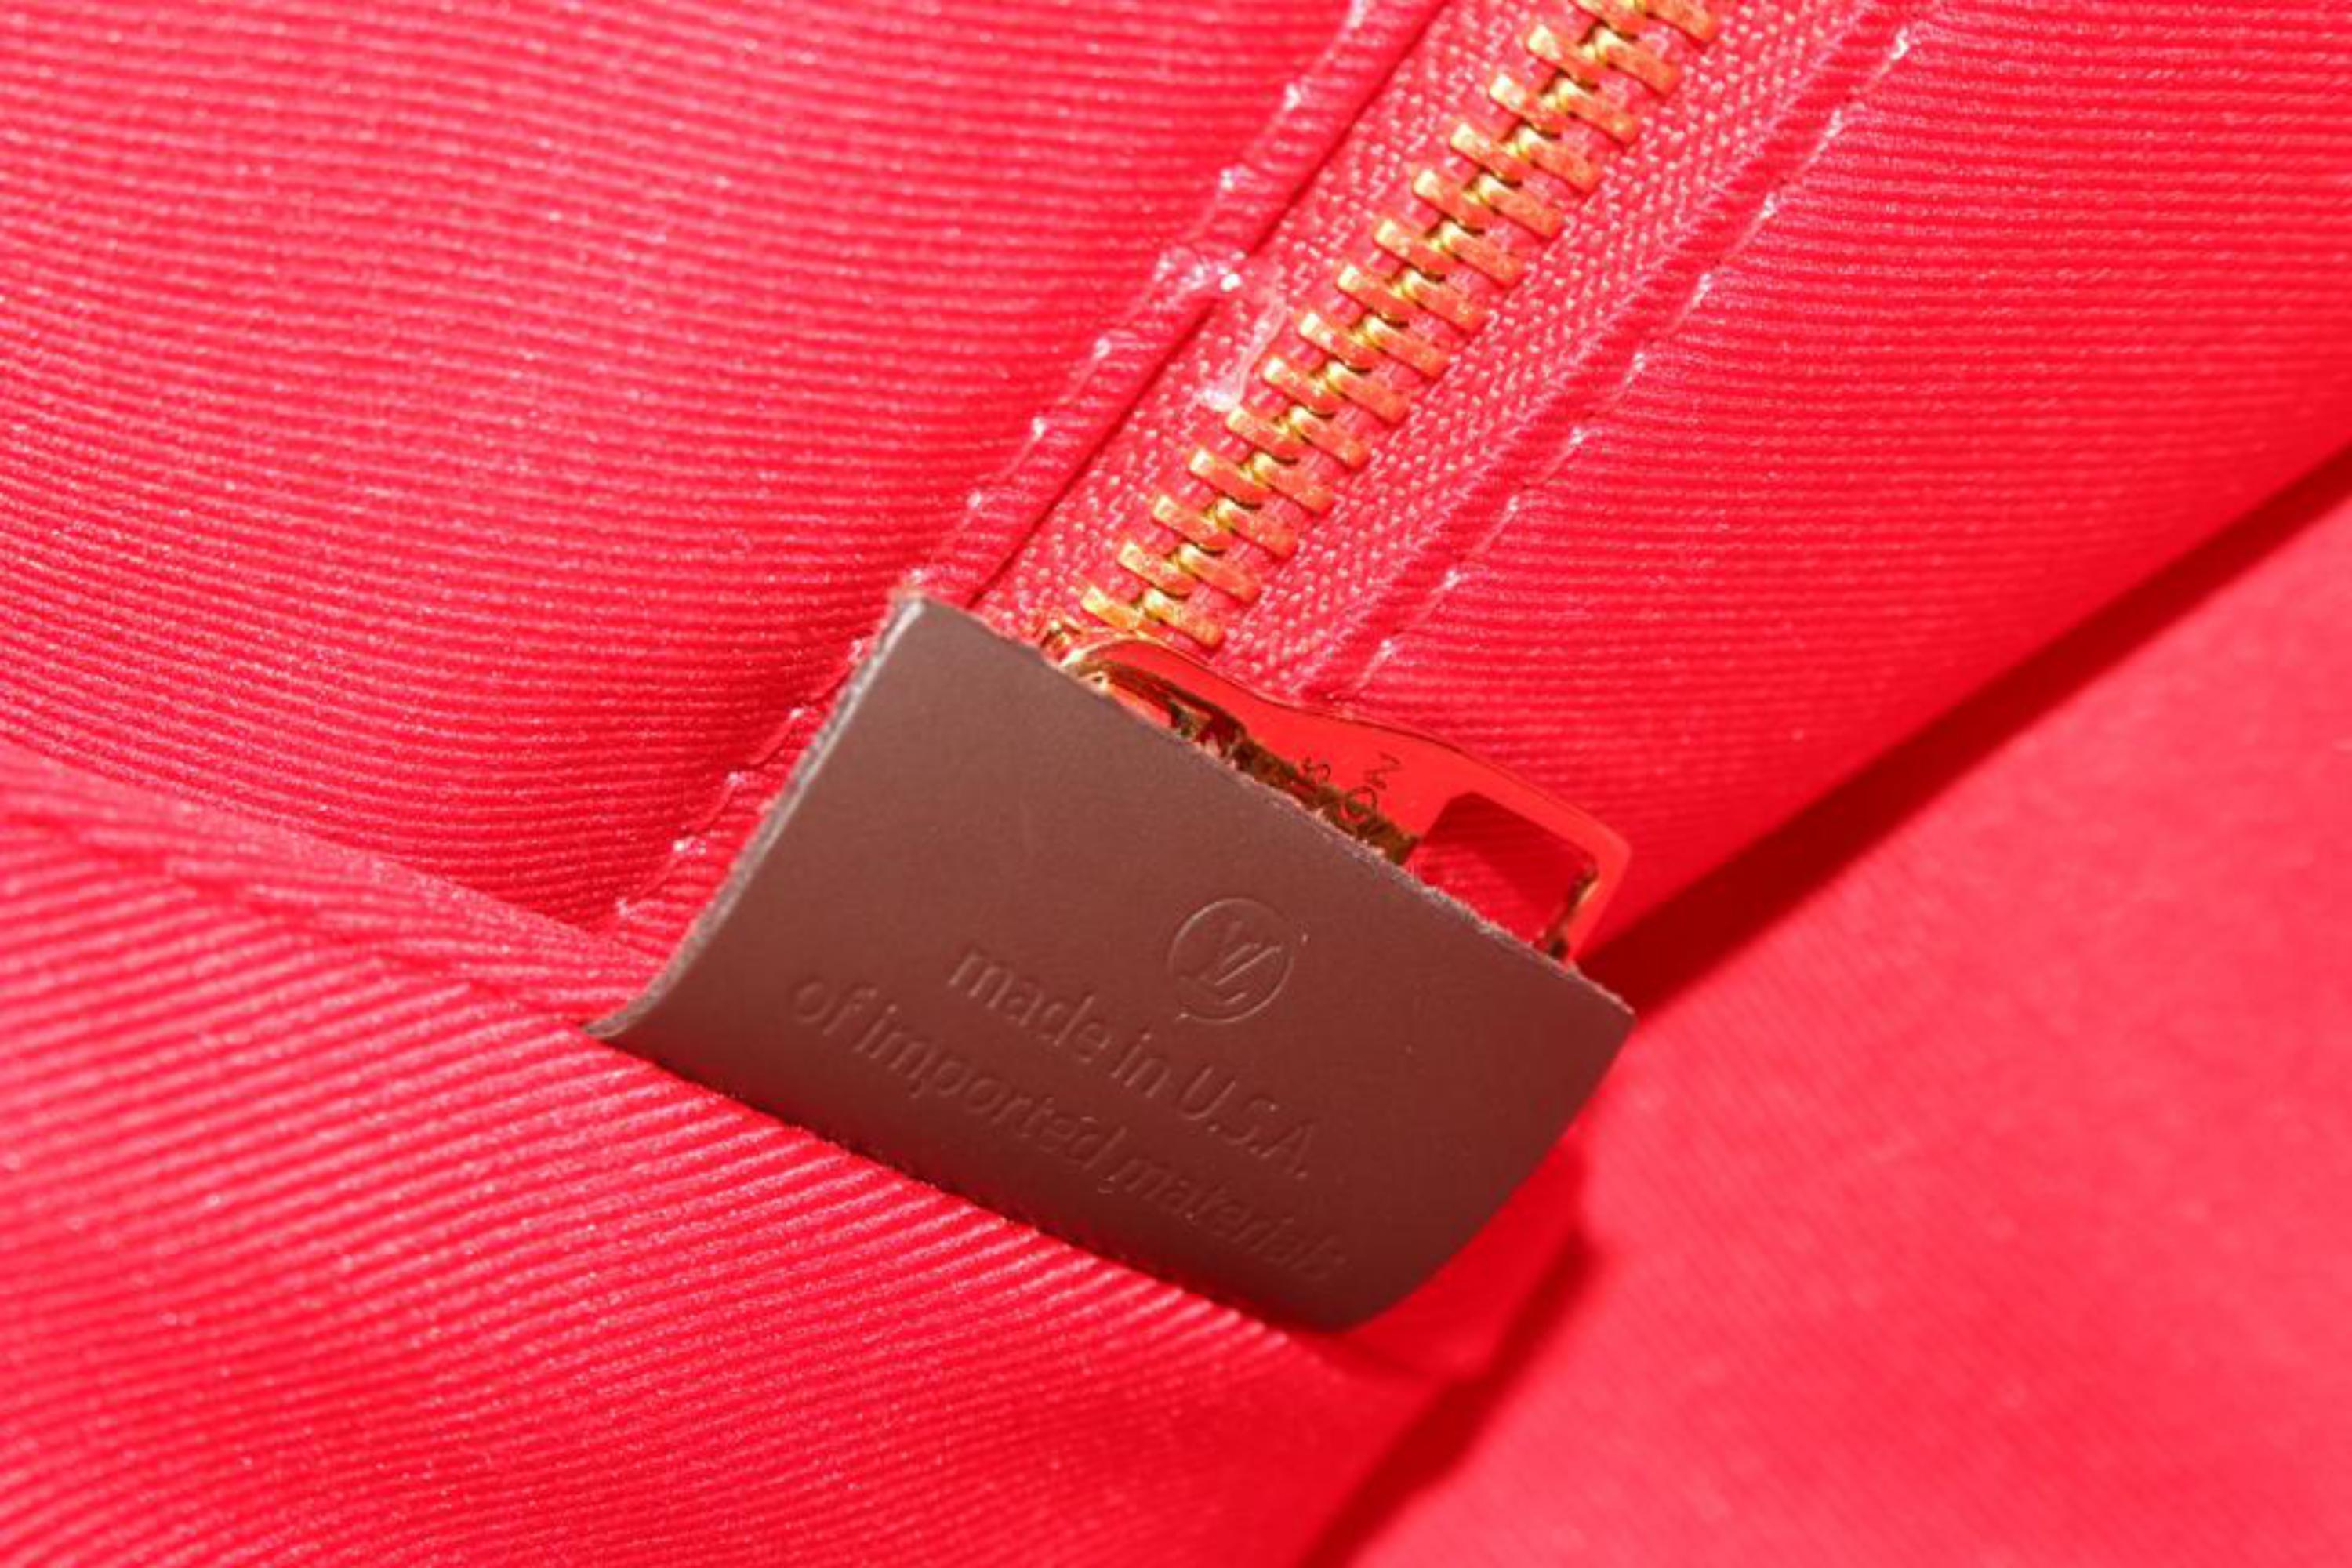 Black Louis Vuitton Damier Ebene Graceful MM Hobo Bag s330lk24 For Sale